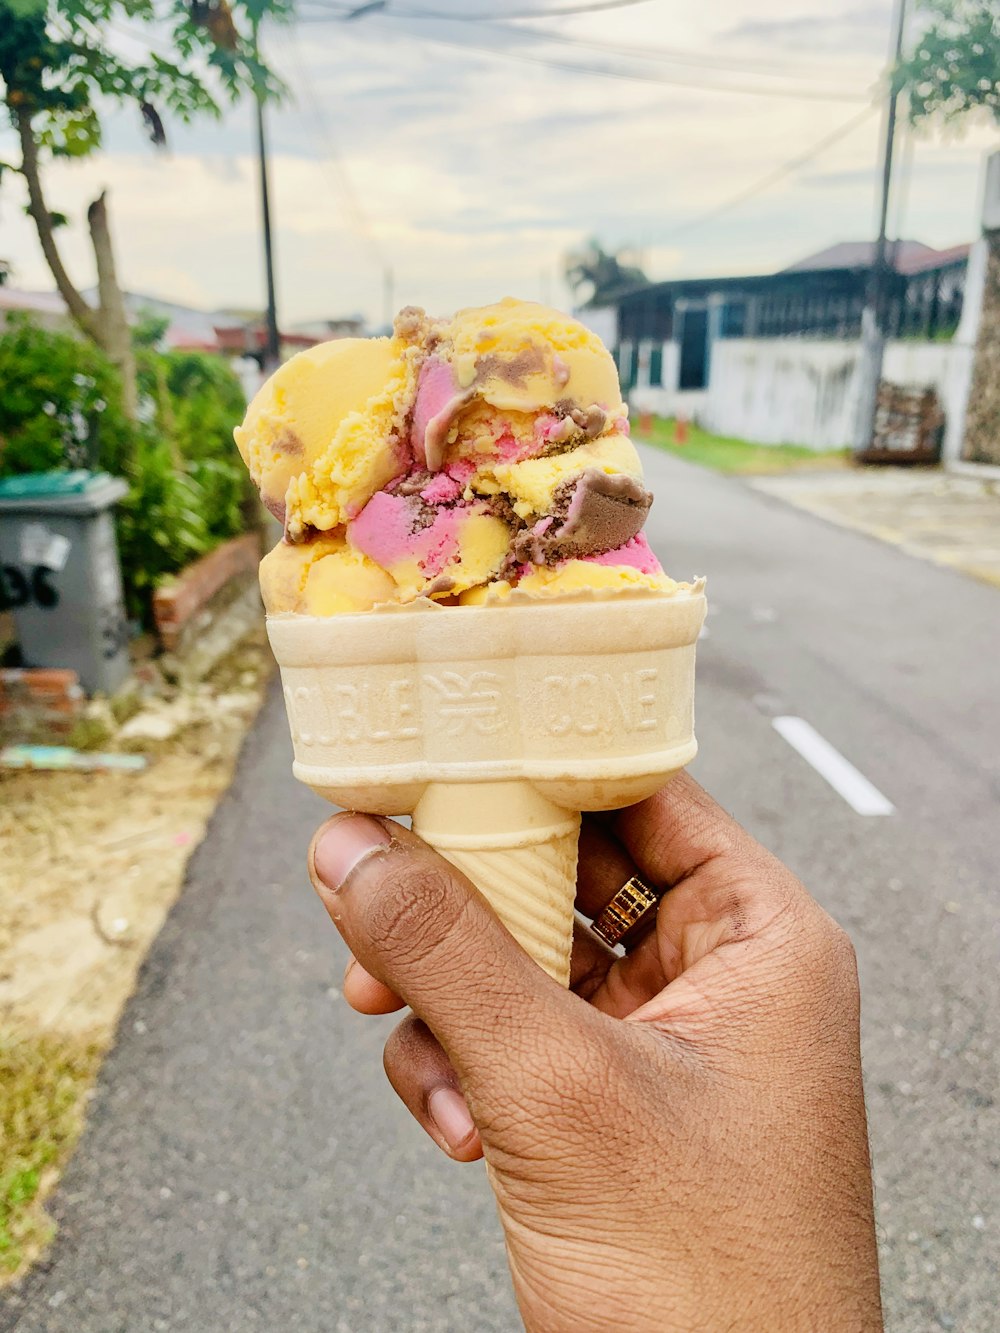 person holding ice cream cone with yellow ice cream